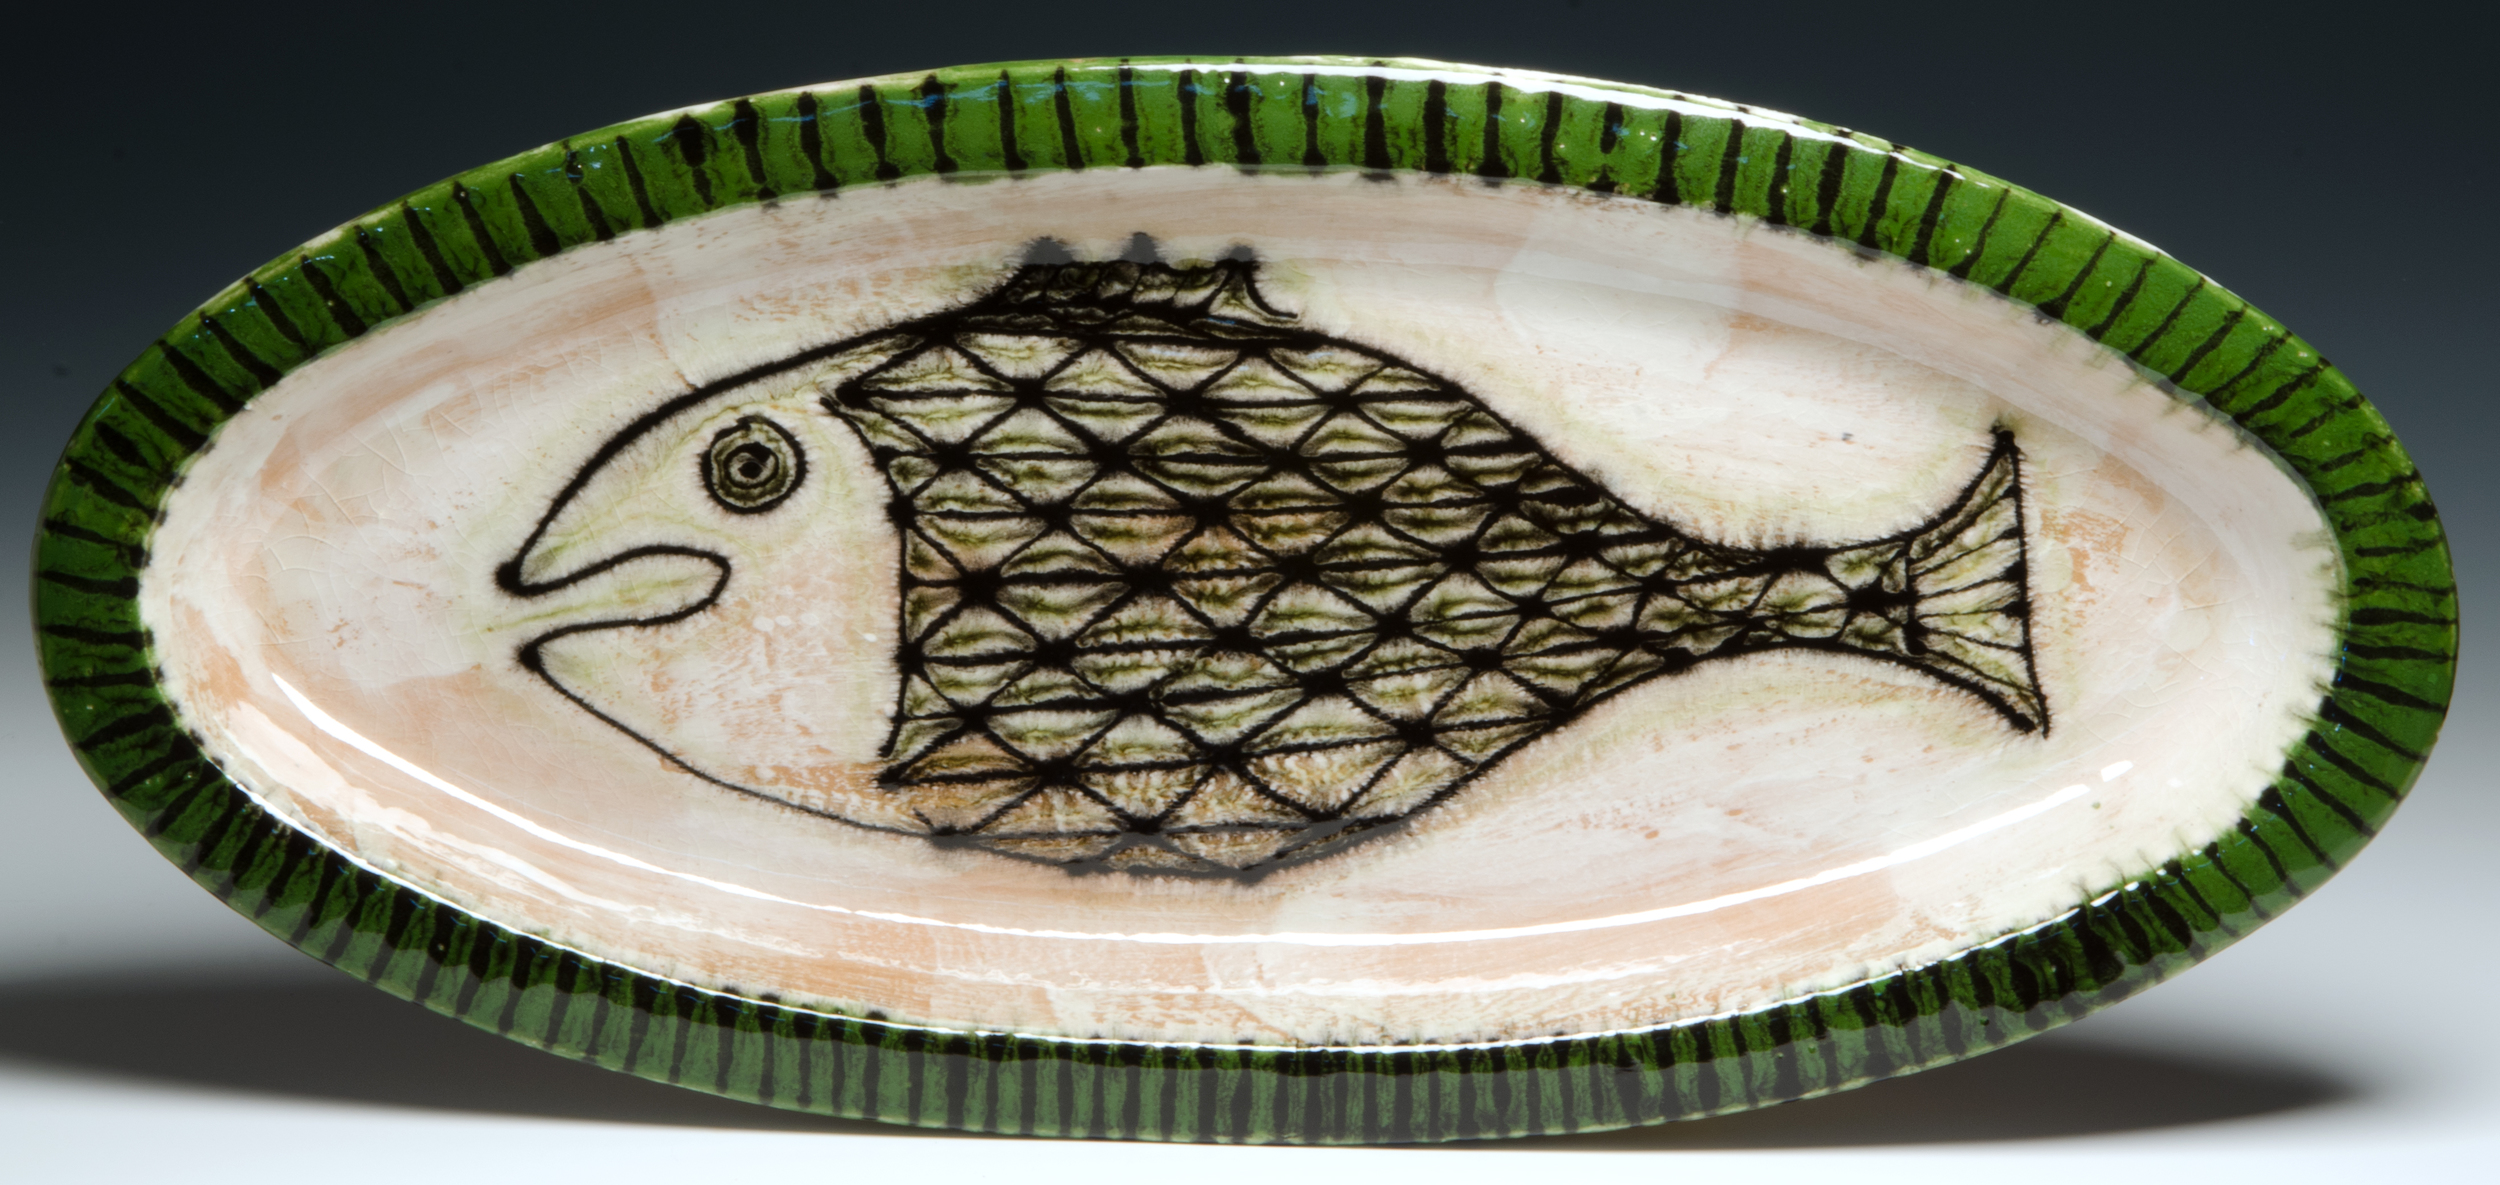  Fish Platter 2016, stoneware, slip , stain, glaze 23.5x11 inches 